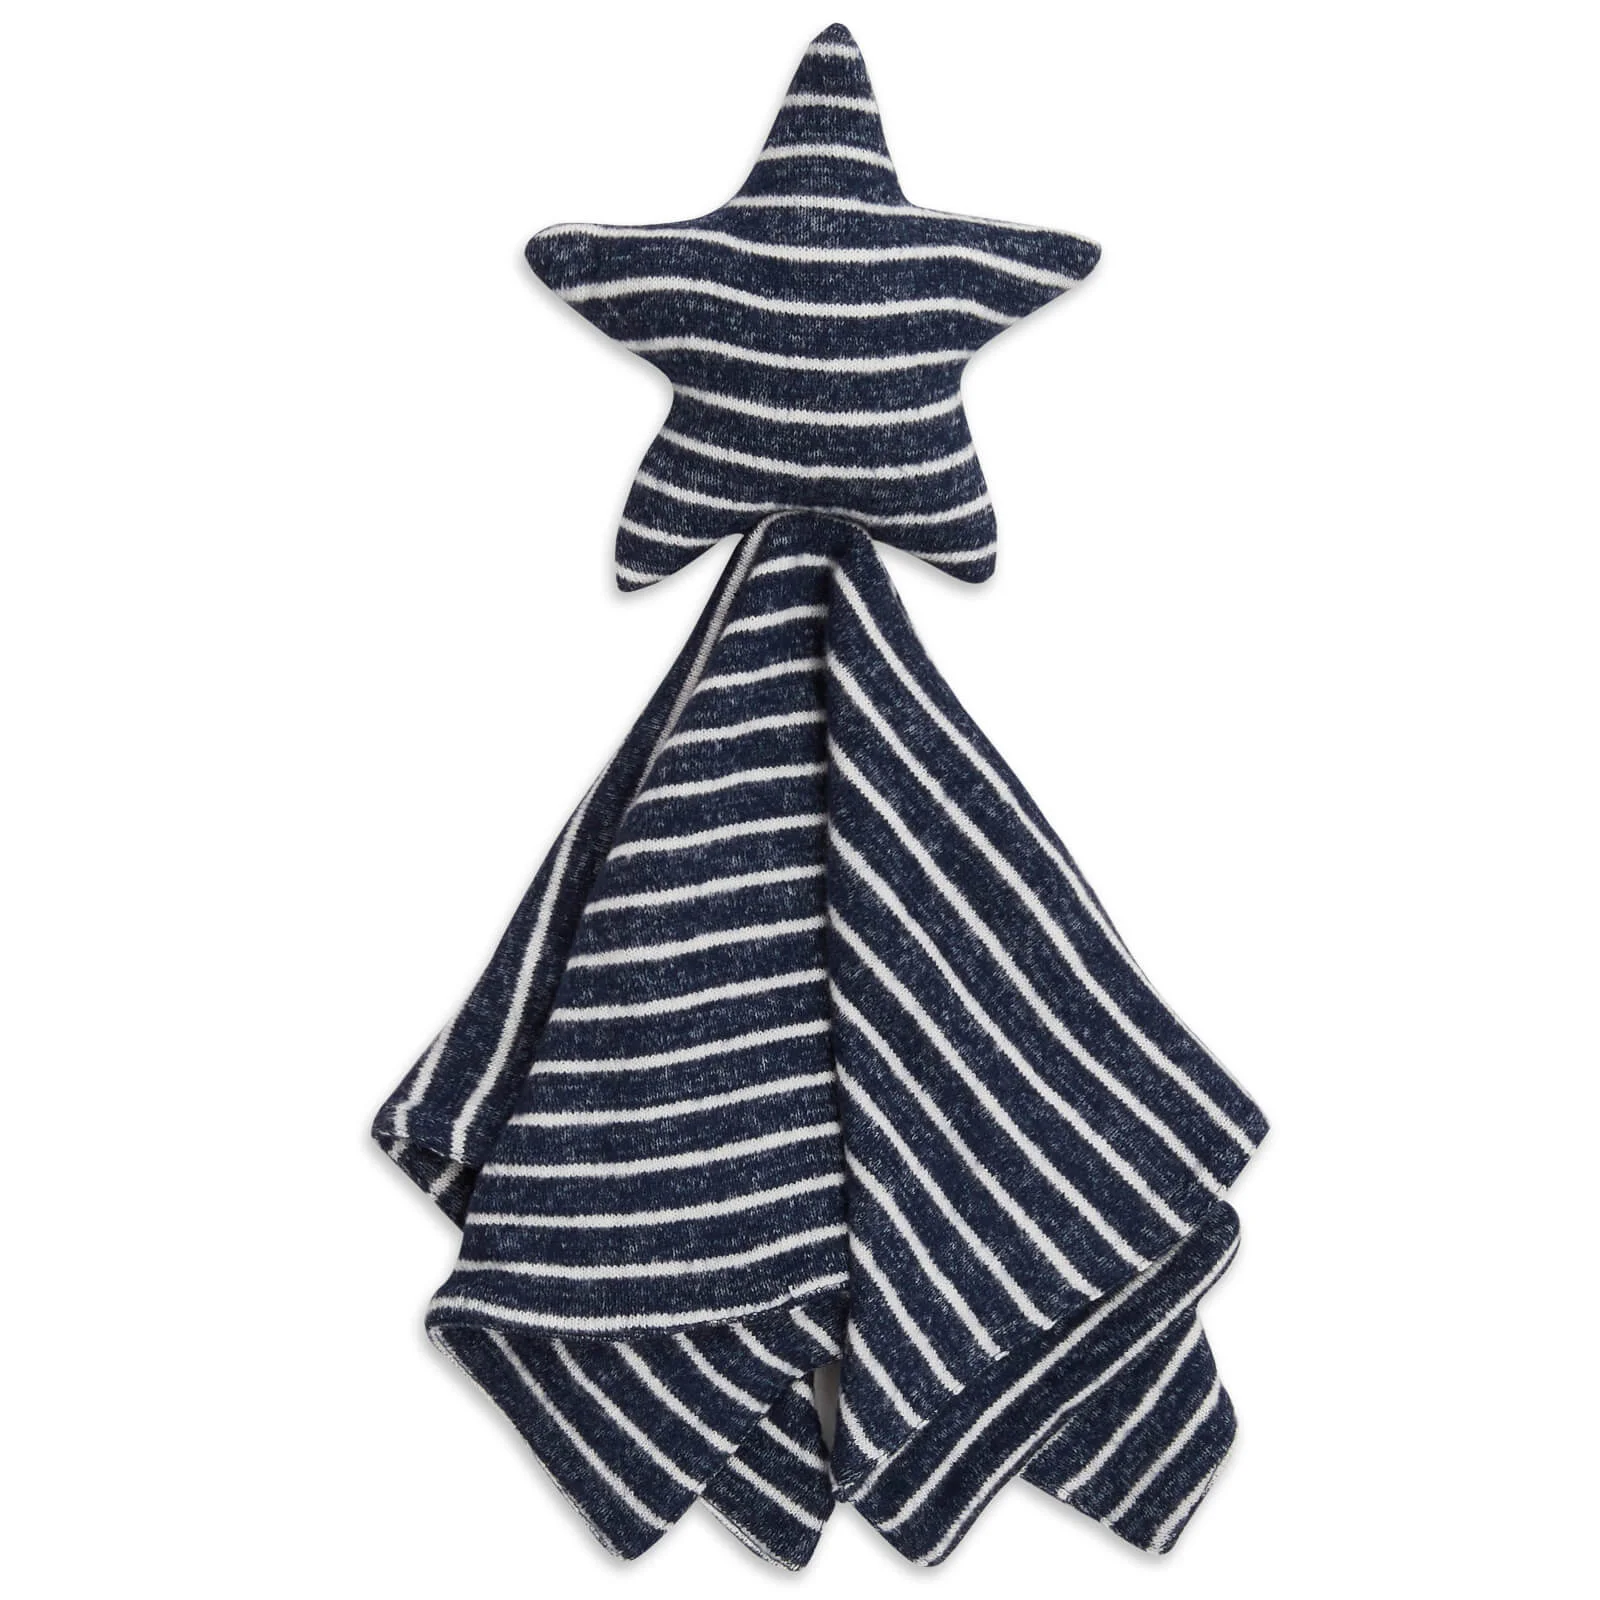 aden + anais Snuggle Knit Star Lovey - Navy Stripe Image 1